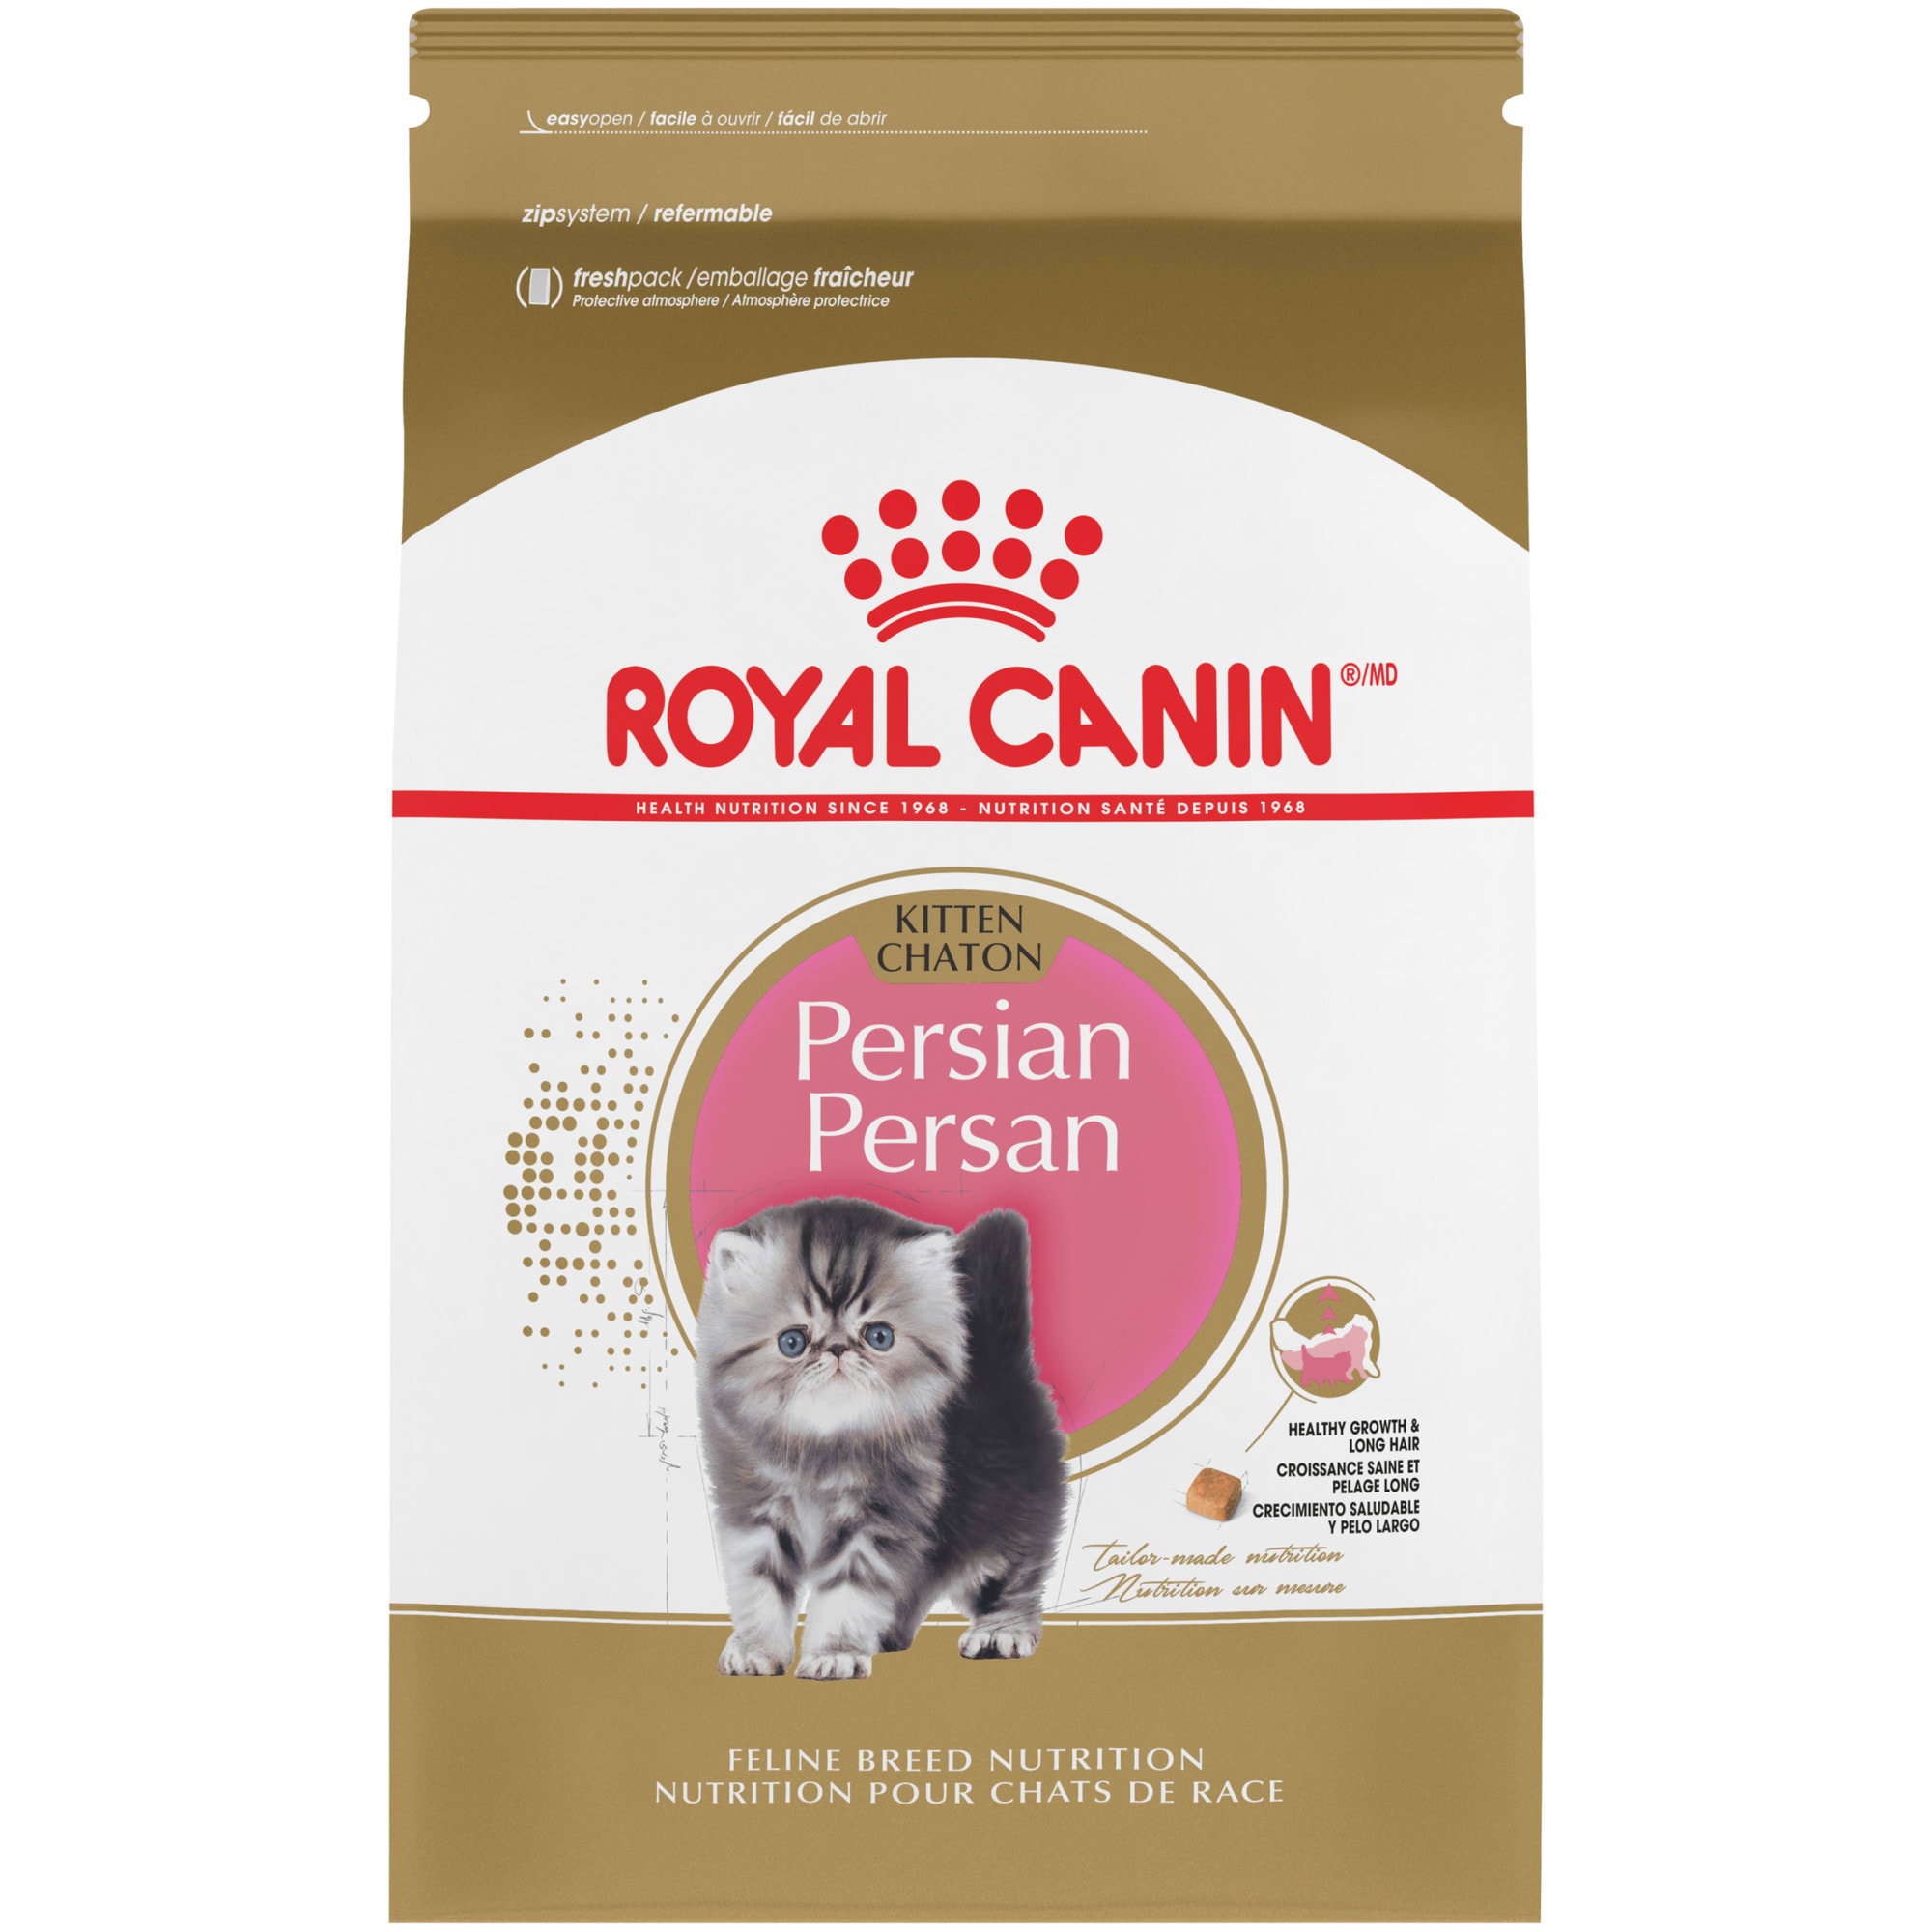 Intact Deserve tonight Royal Canin Persian Breed Dry Kitten Food, 3 lbs. | Petco